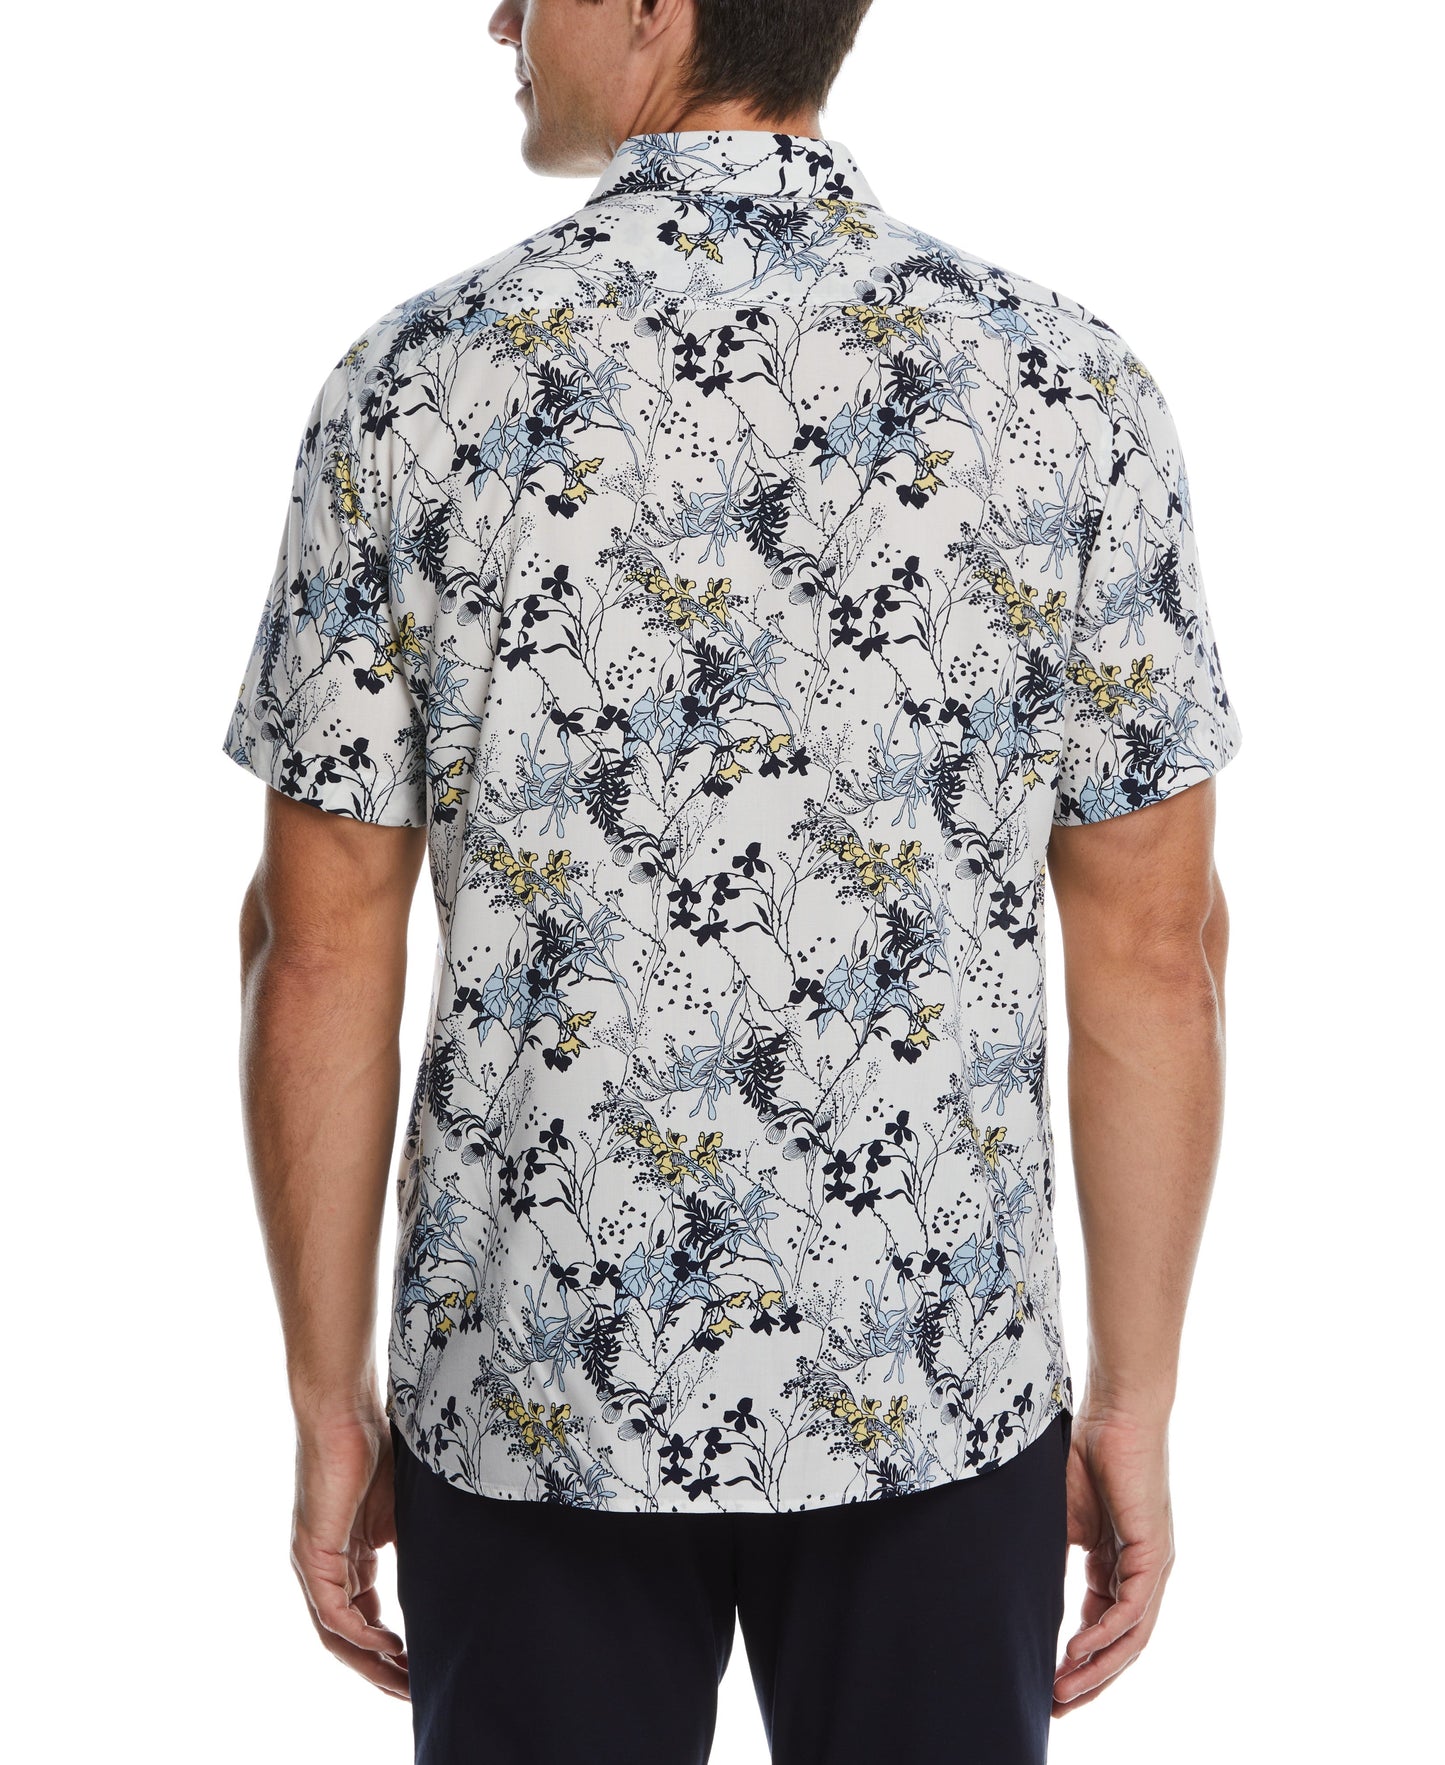 Soft Floral Print Shirt